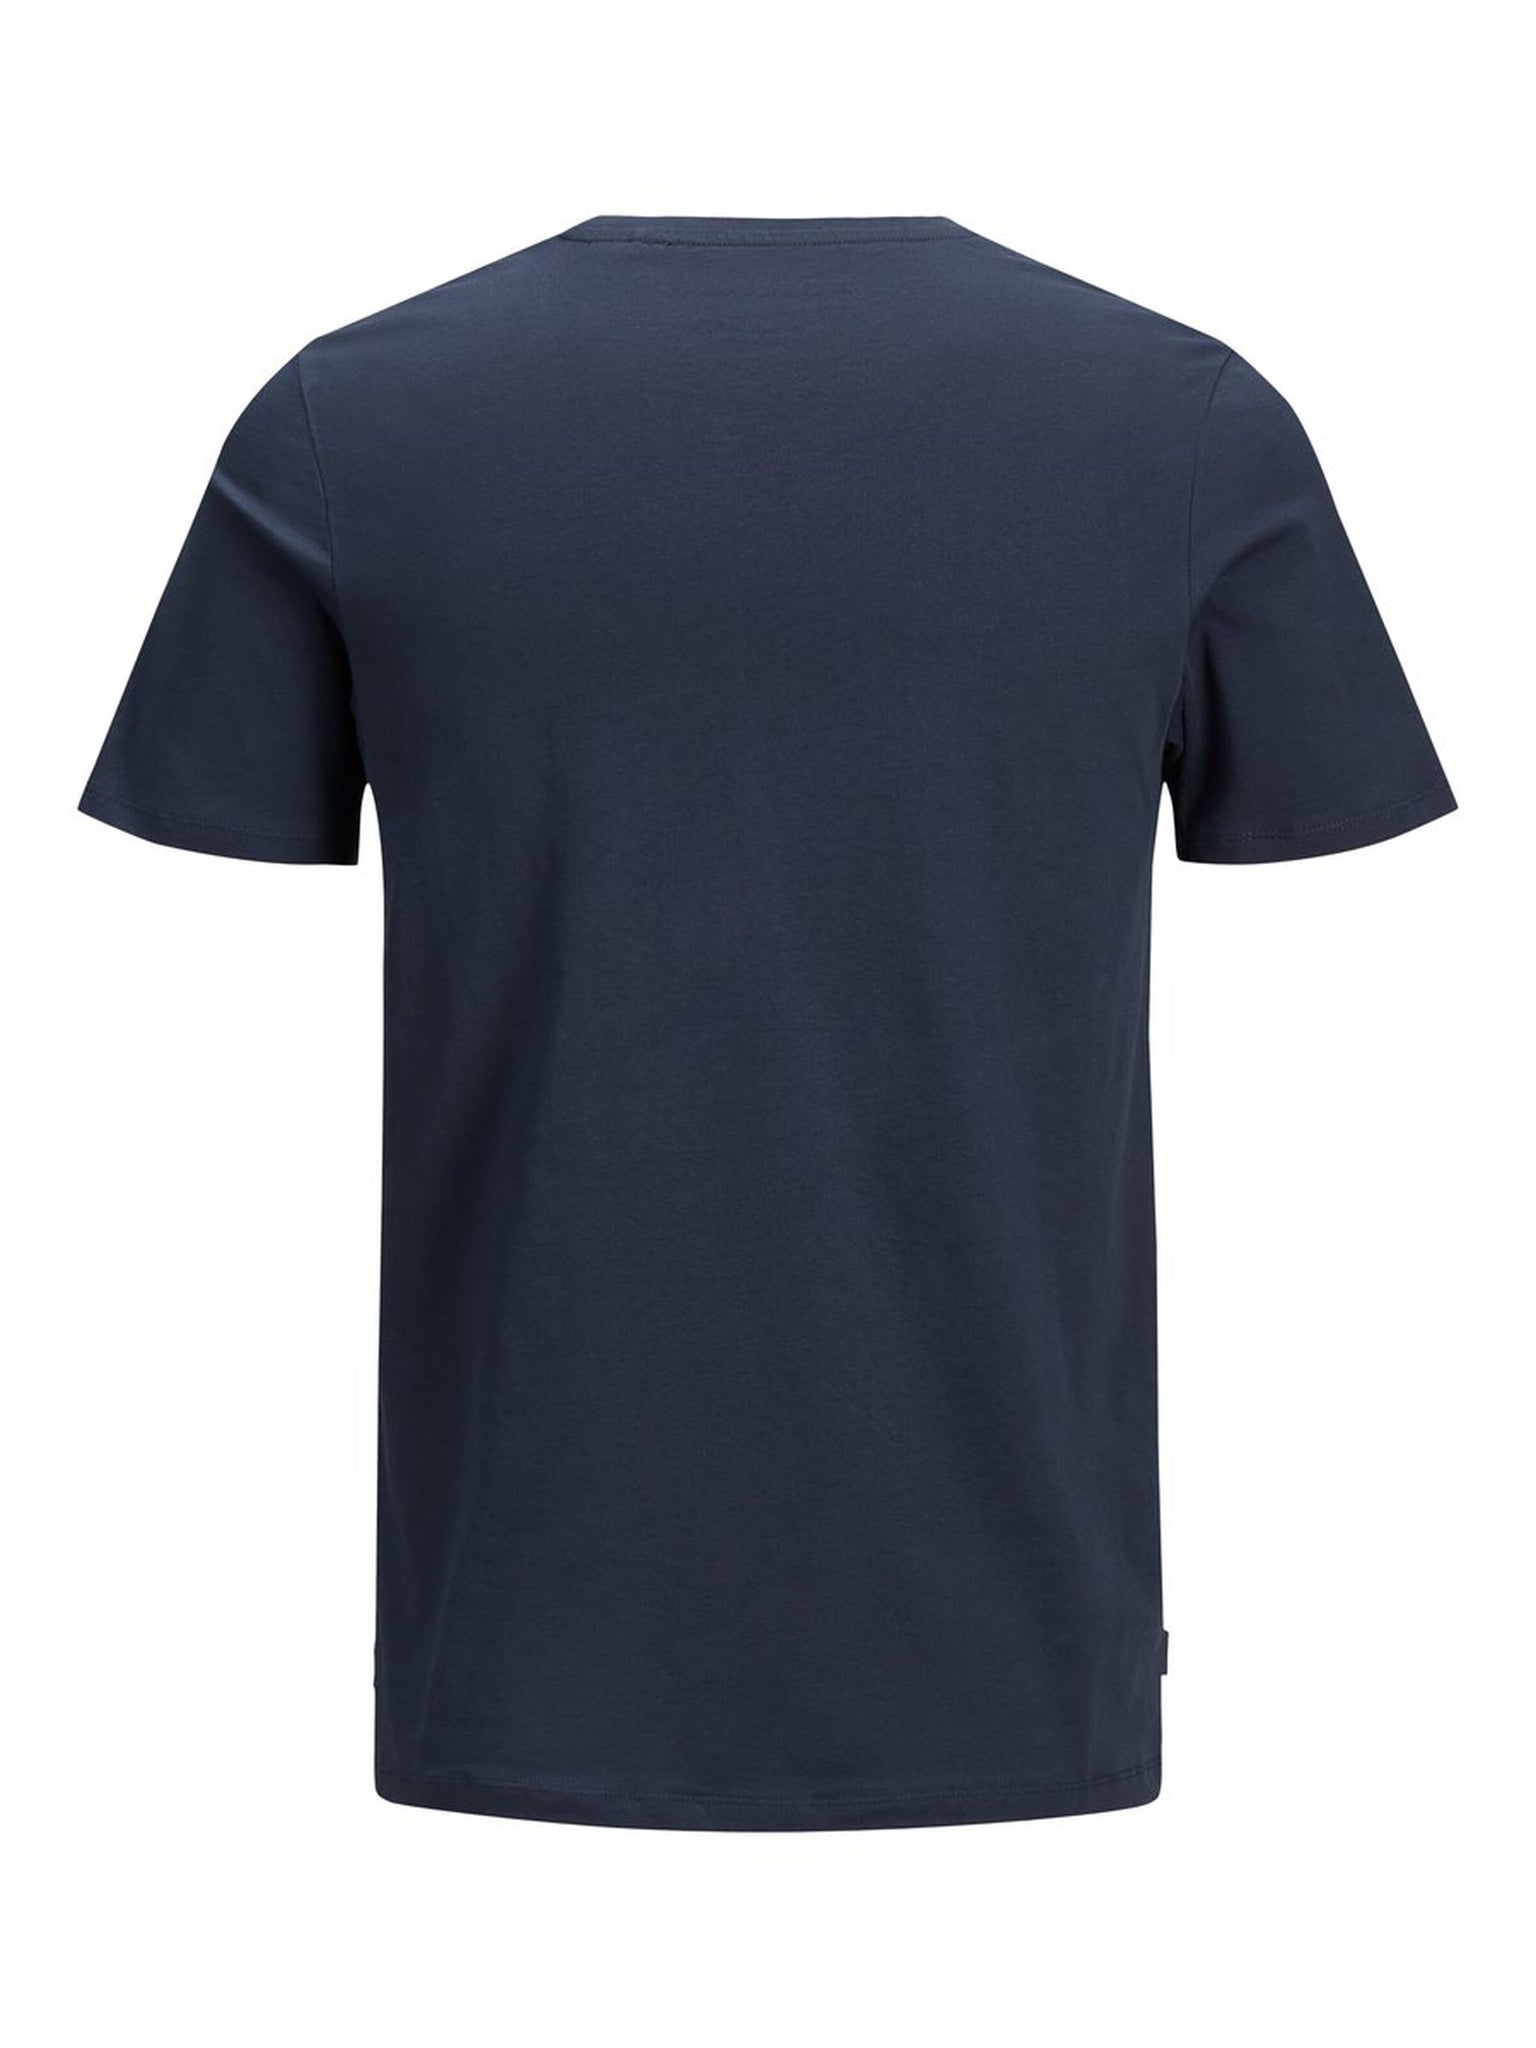 T-shirt Organic basic, navy blazer